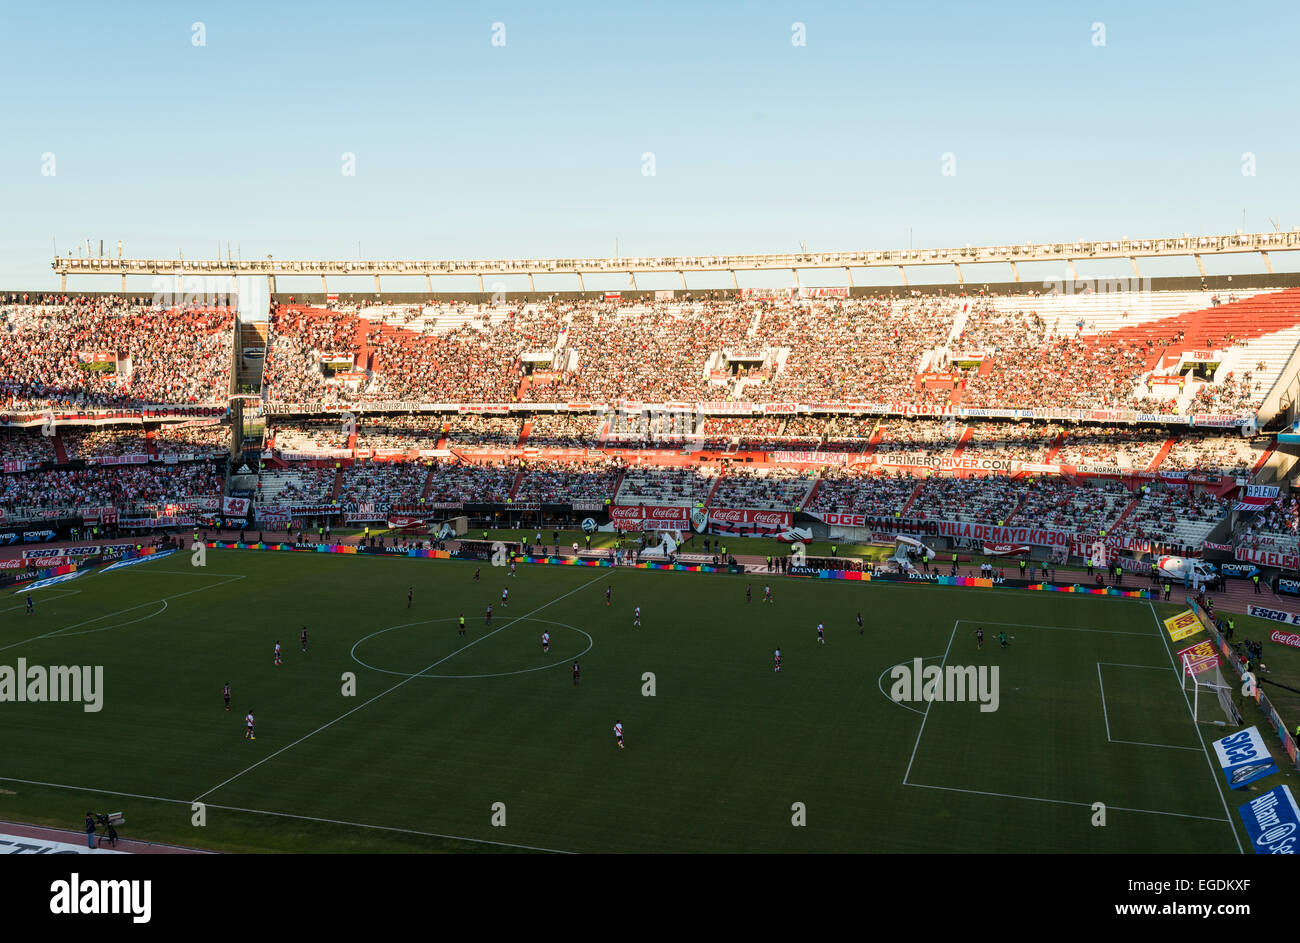 River Plate vs Lanús, Estadio Monumental Antonio Vespucio Liberti, Belgrano, Buenos Aires, Argentina Stock Photo